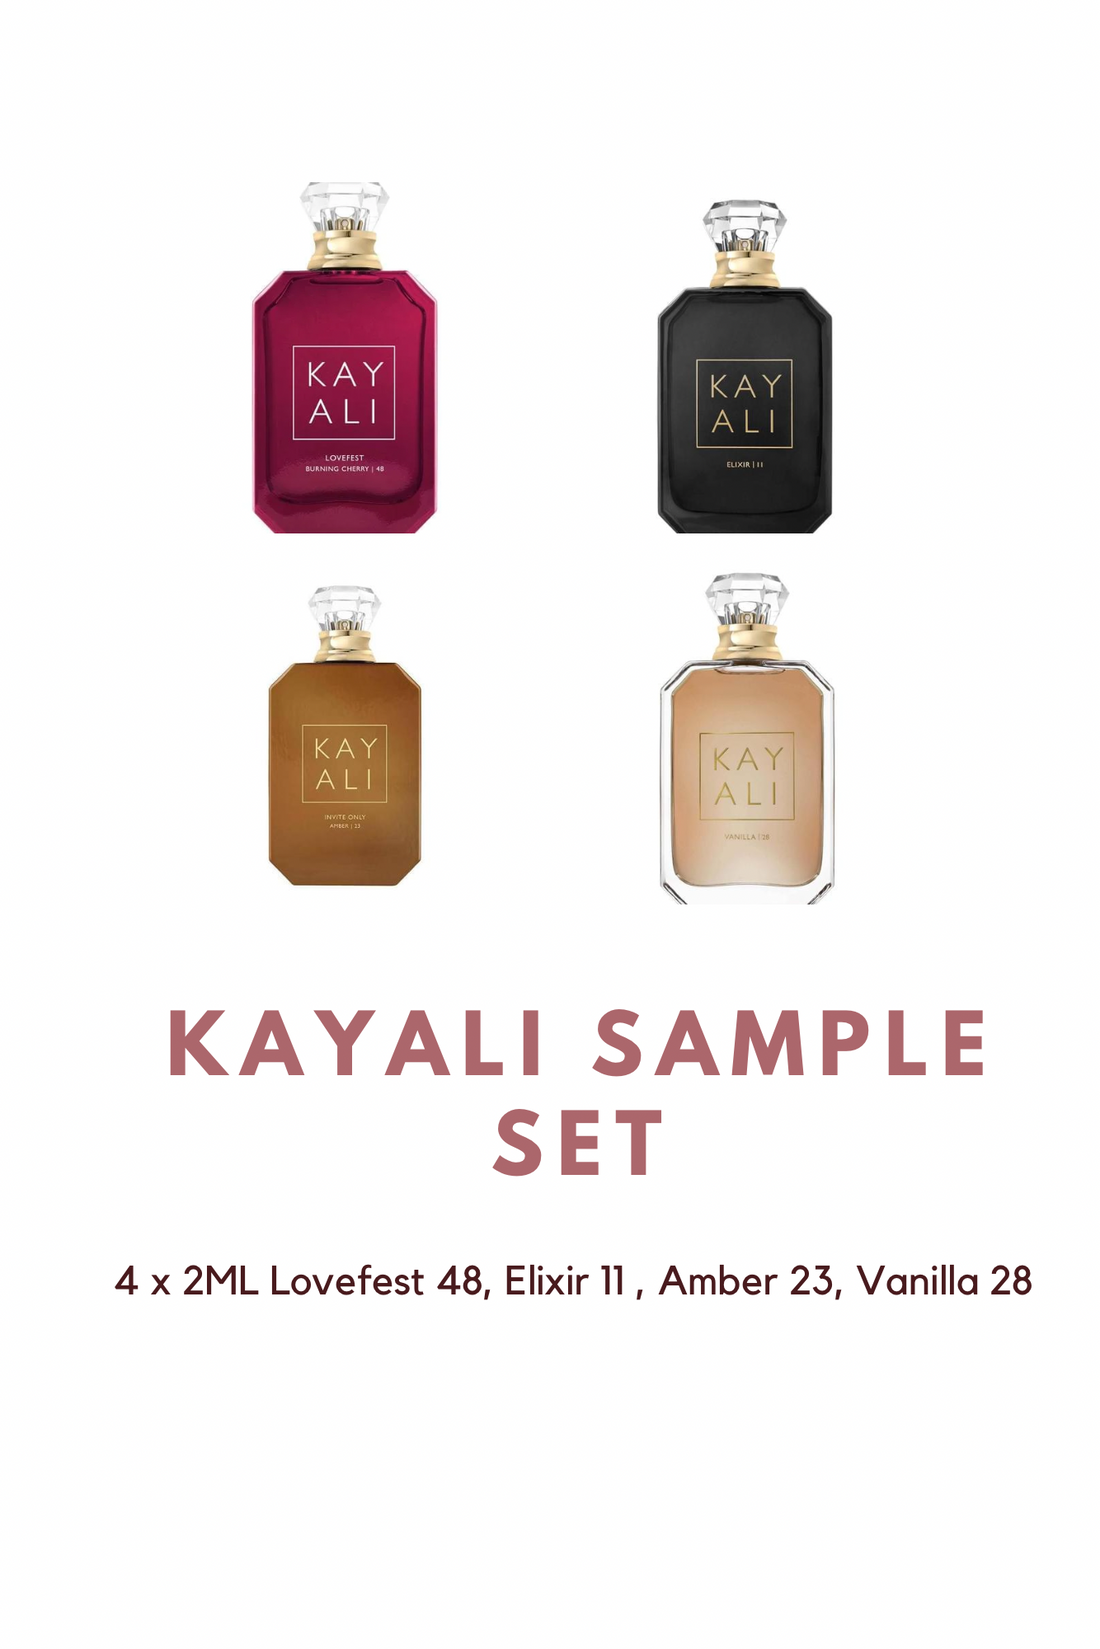 Kayali Sample Set 4 x 2ML (LOVEFEST, ELIXIR, AMBER AND VANILLA) Eau De Parfum Samples